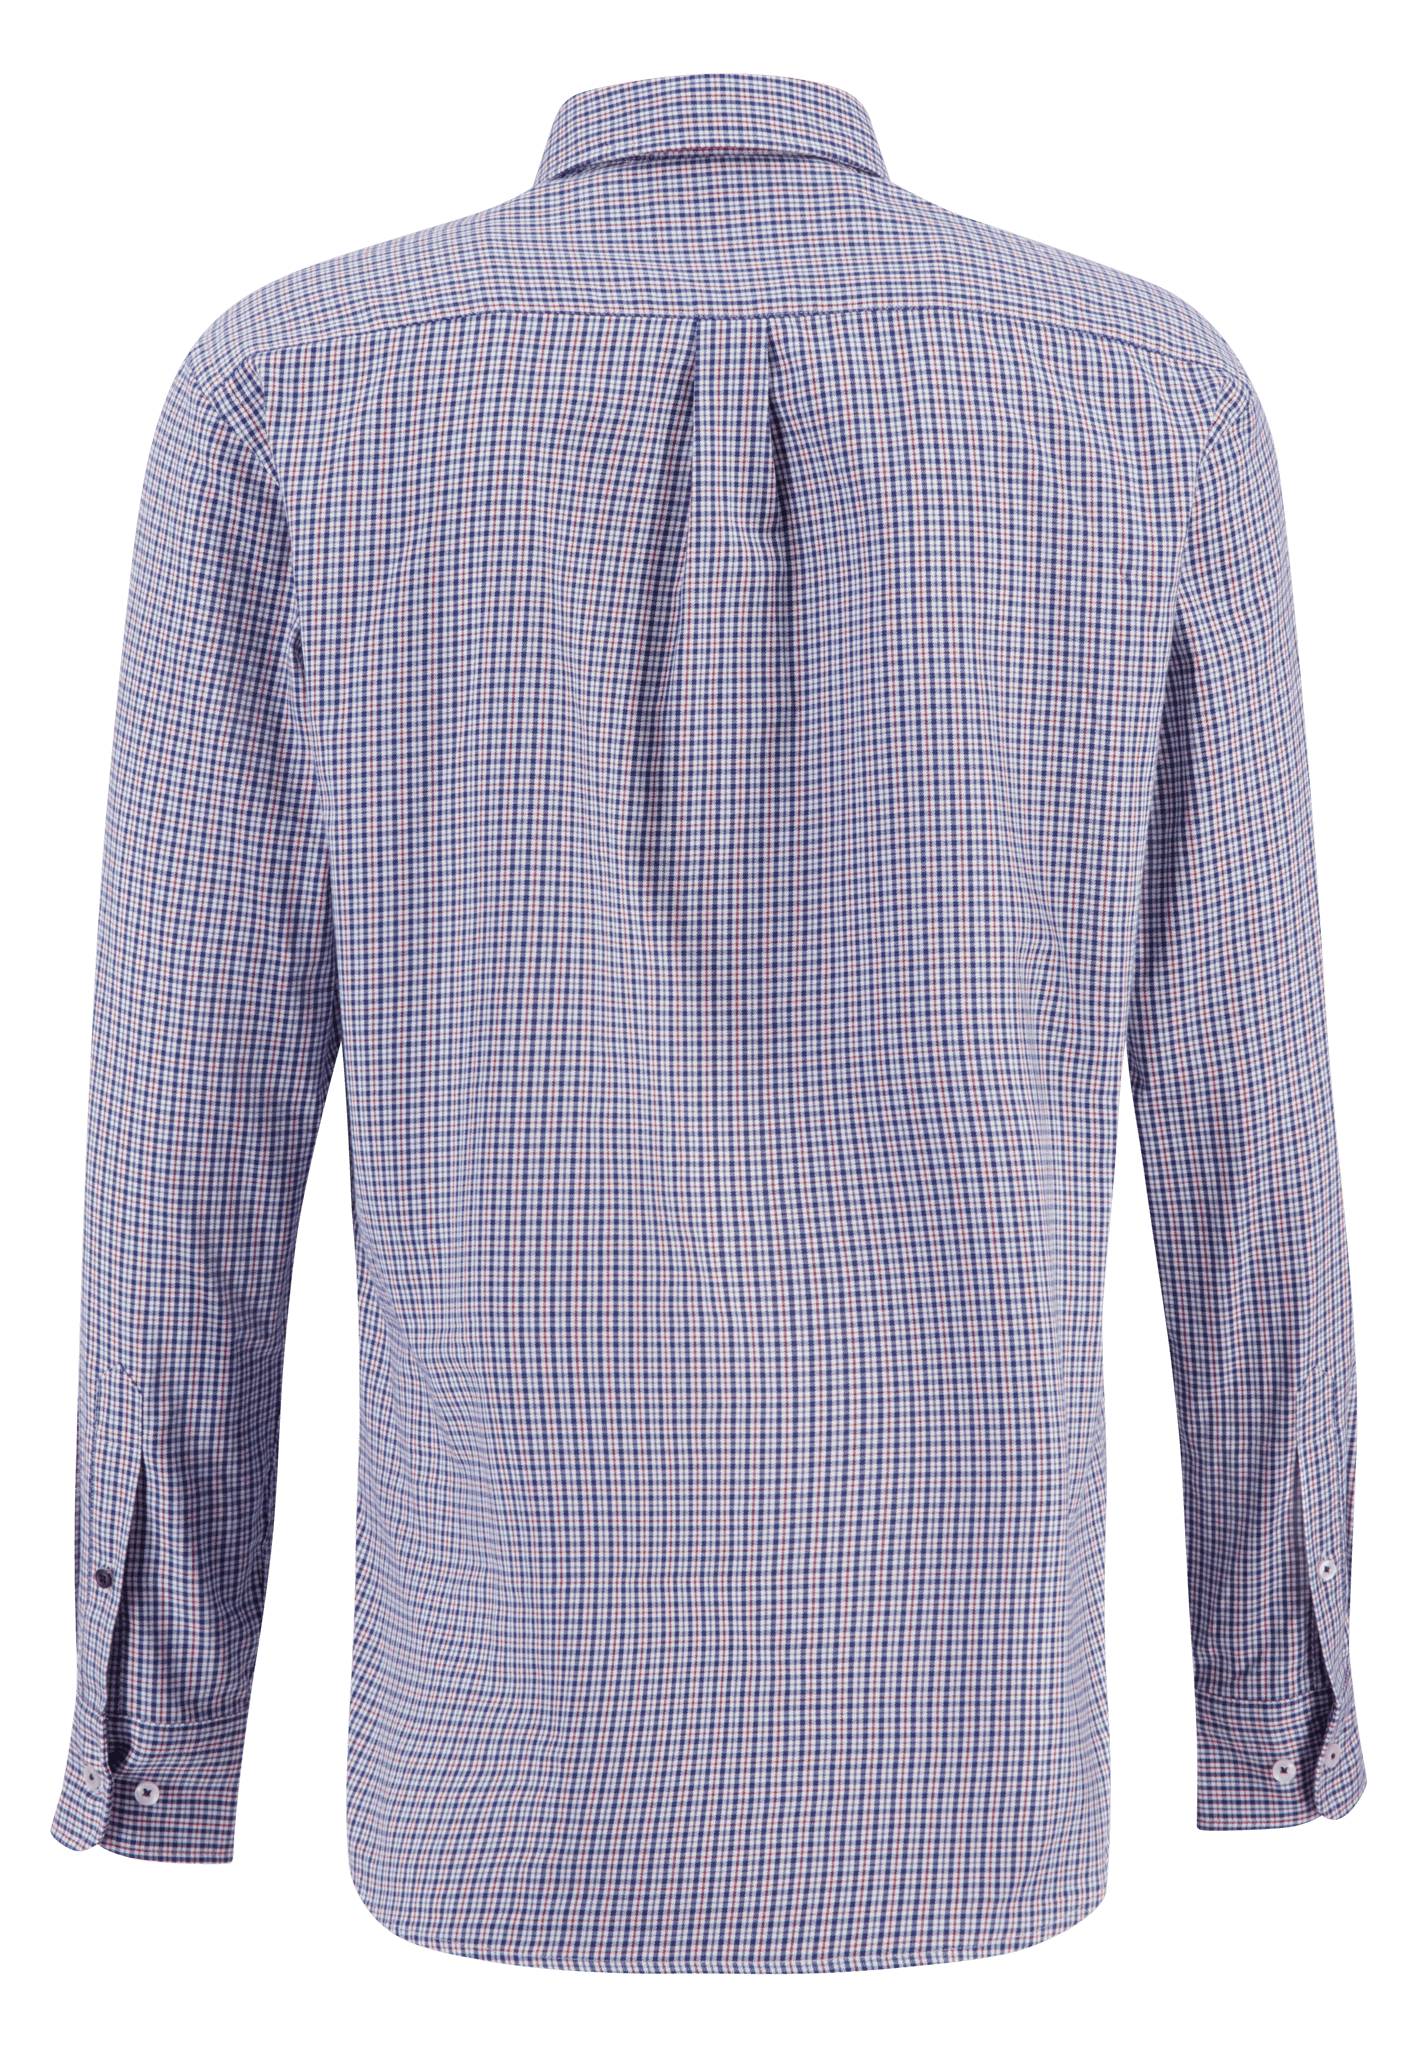 Fynch Hatton Long Sleeved Check Shirt - Blue